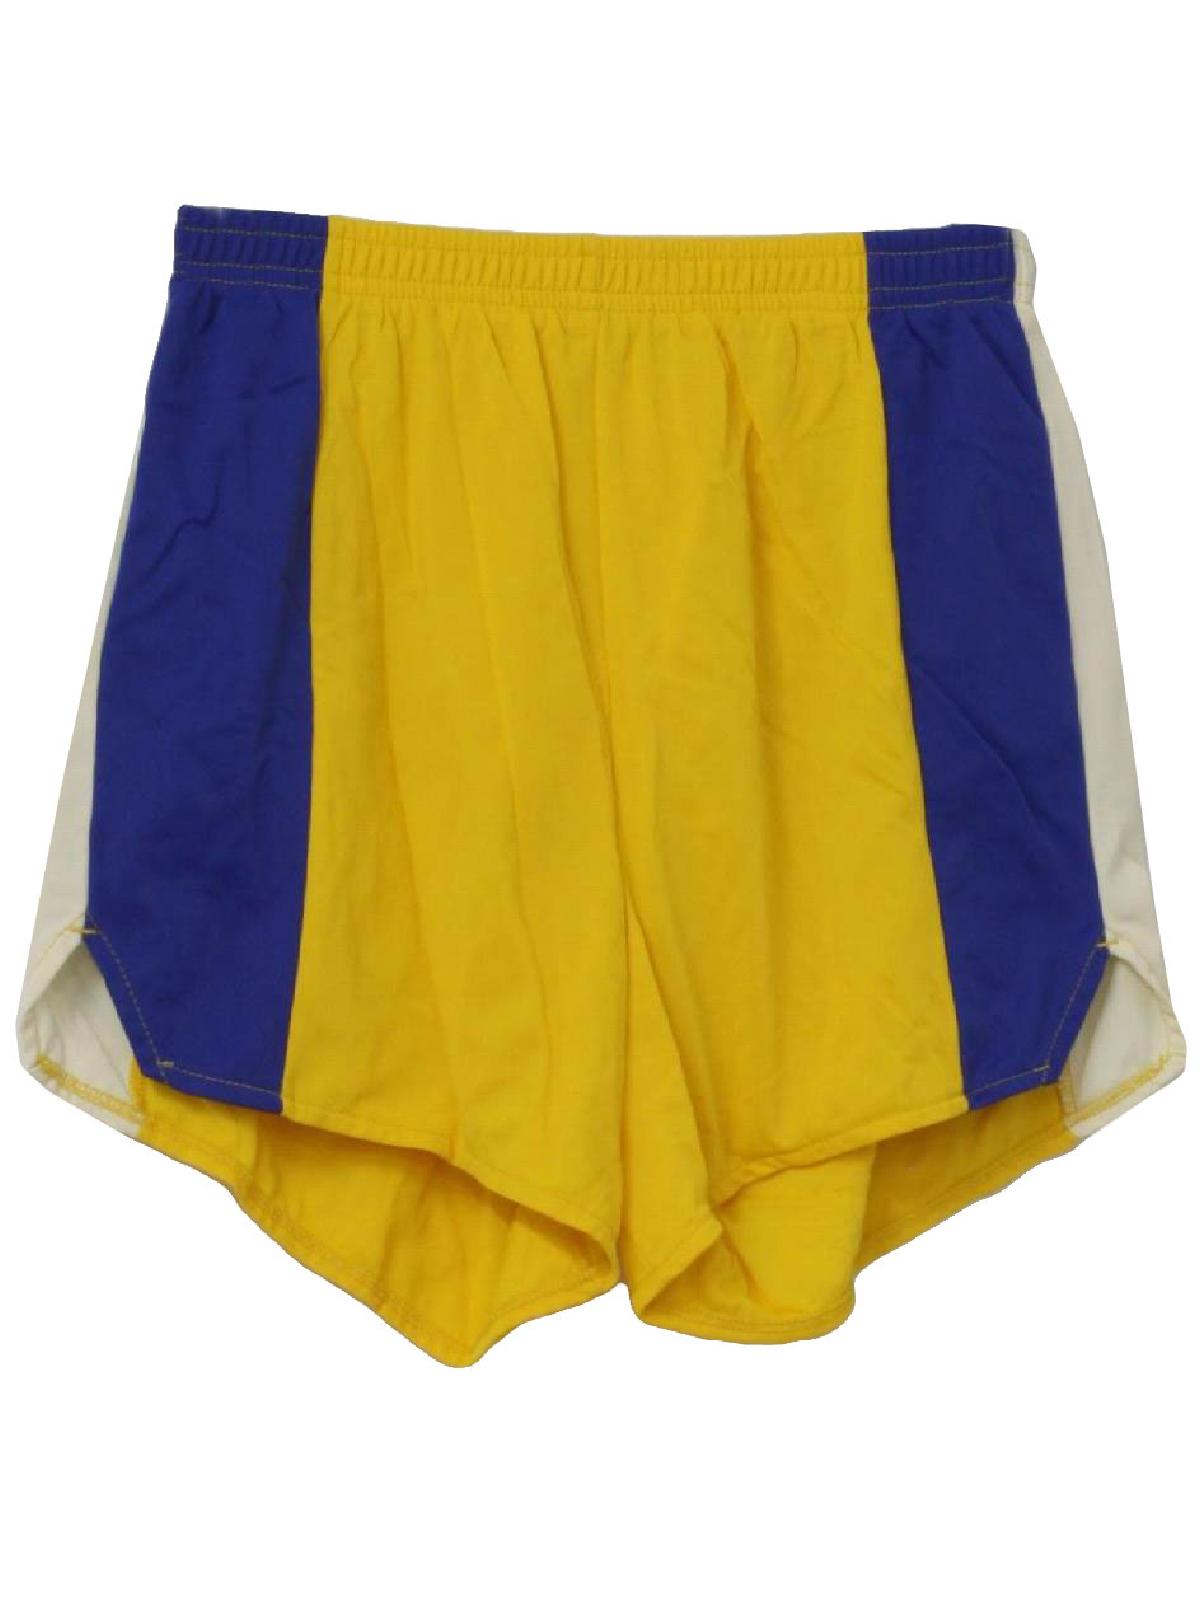 Retro Nineties Shorts: 90s -Pacific Coast Sportswear- Mens yellow ...